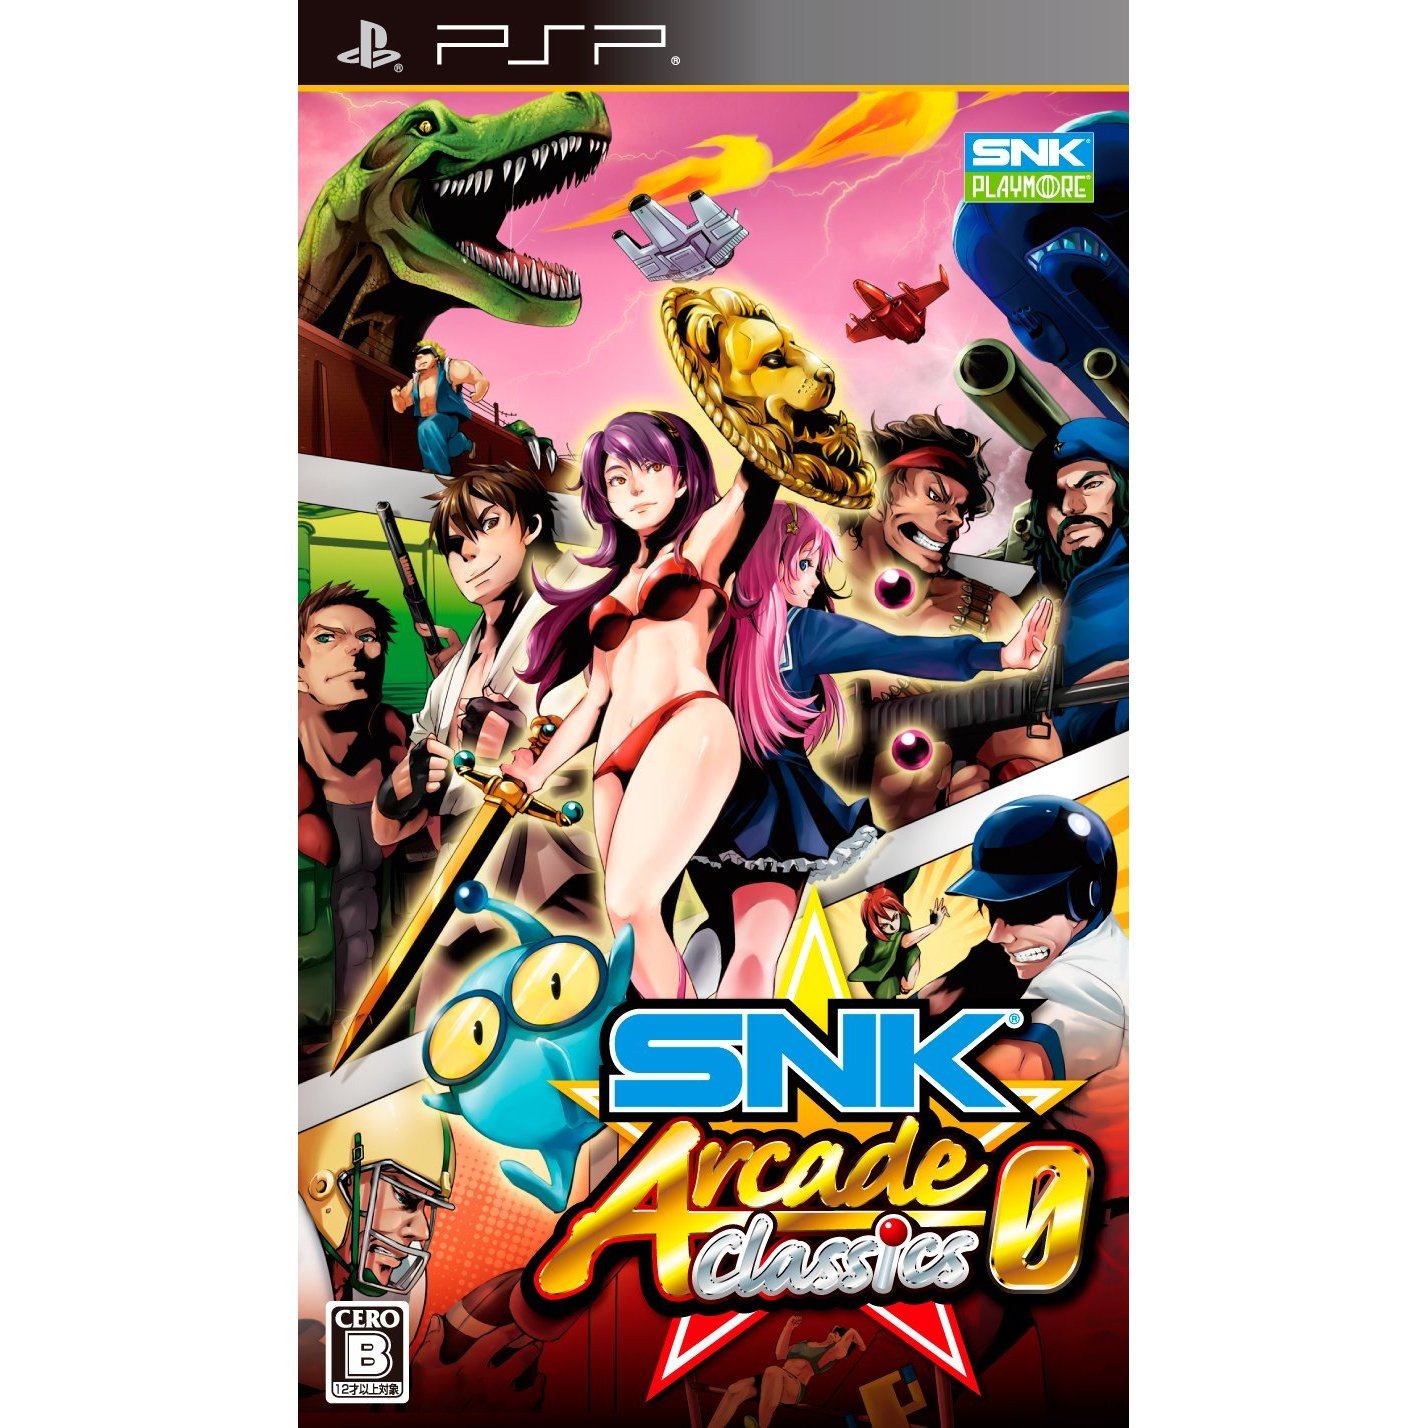 SNK Arcade Classics 0 for Sony PSP - Bitcoin & Lightning accepted